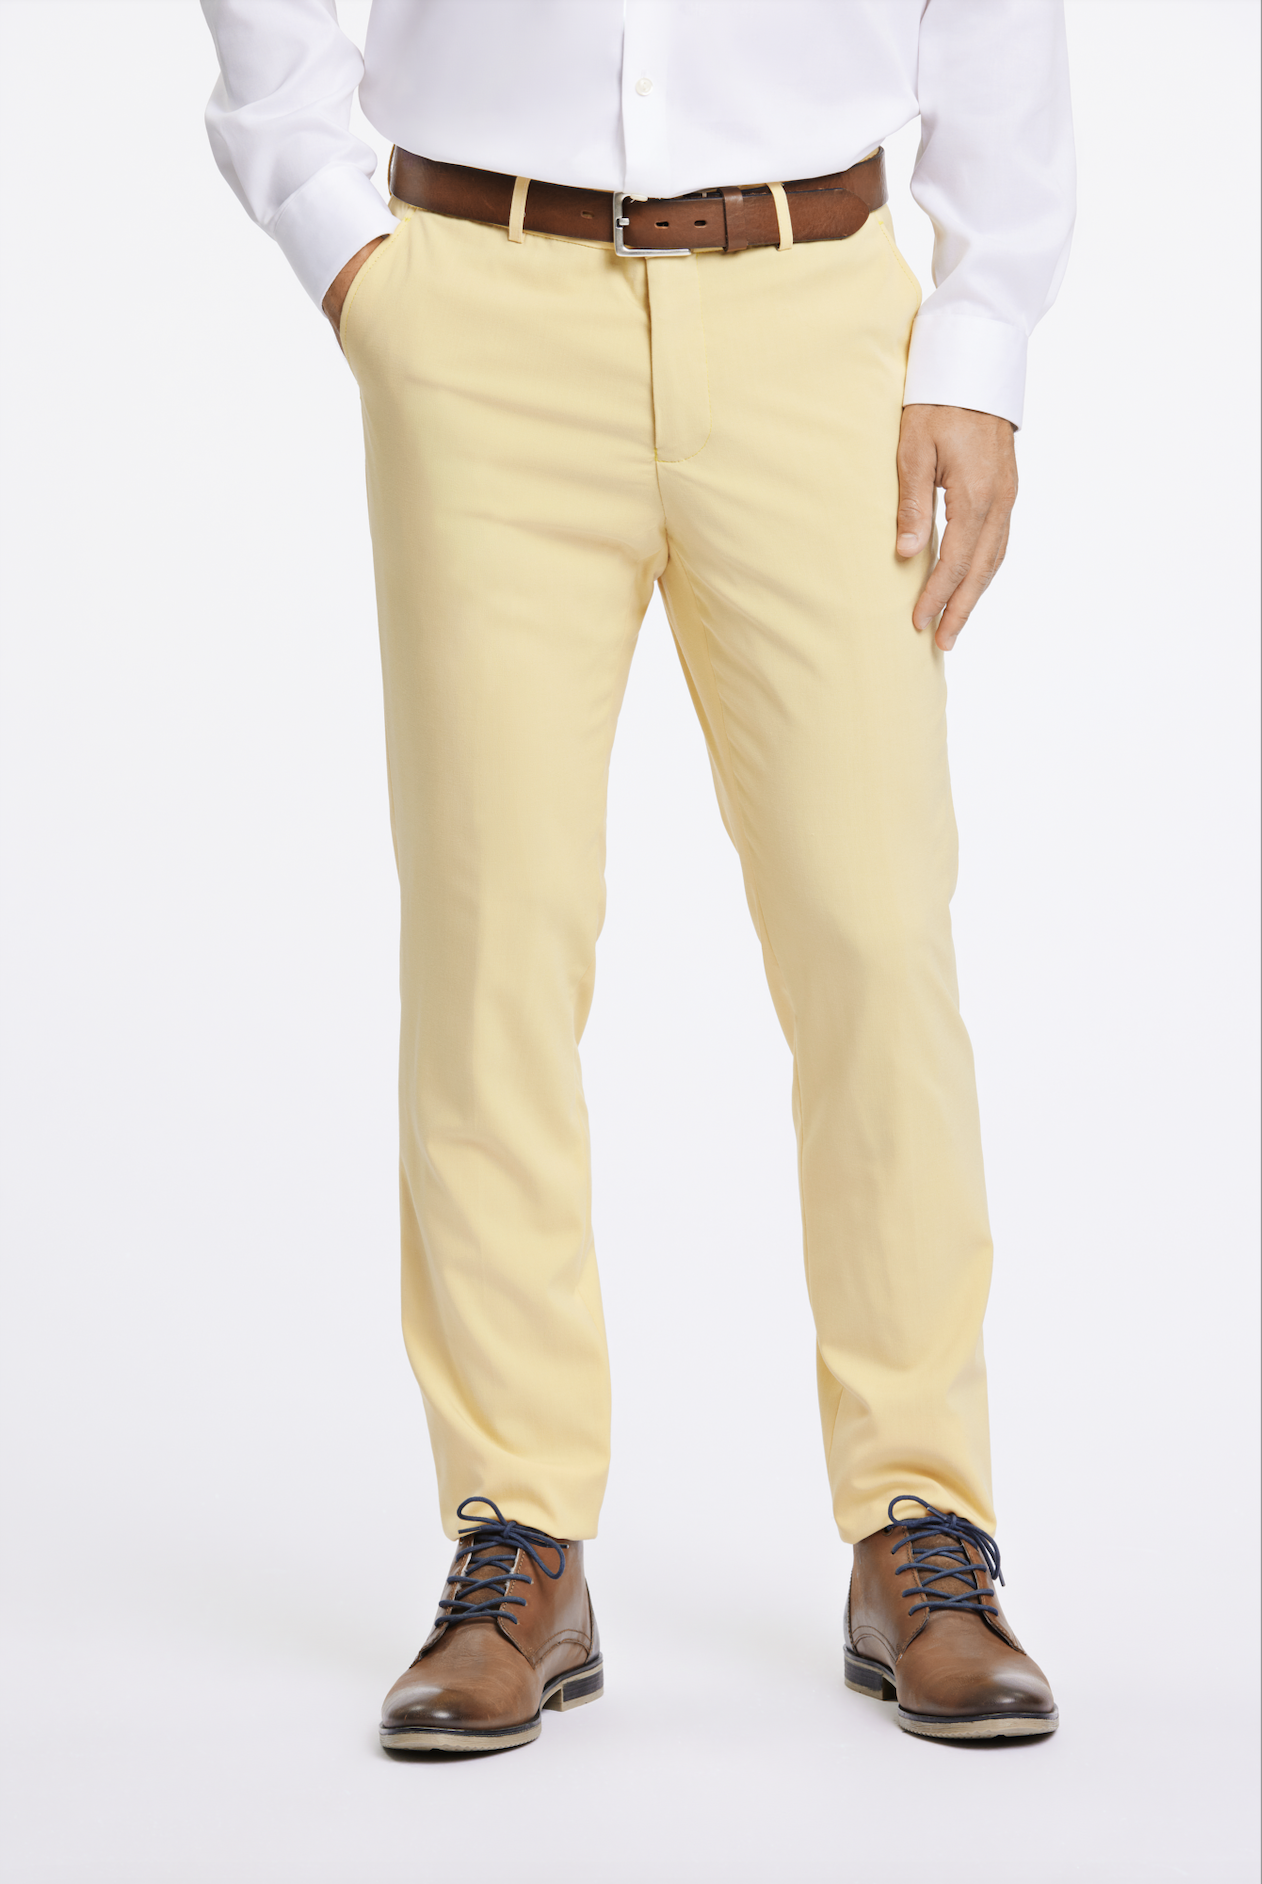 Men's Yellow Pants Outfits-35 Best Ways to Wear Yellow Pants | Mens yellow  pants, Mens outfits, Pants outfit men